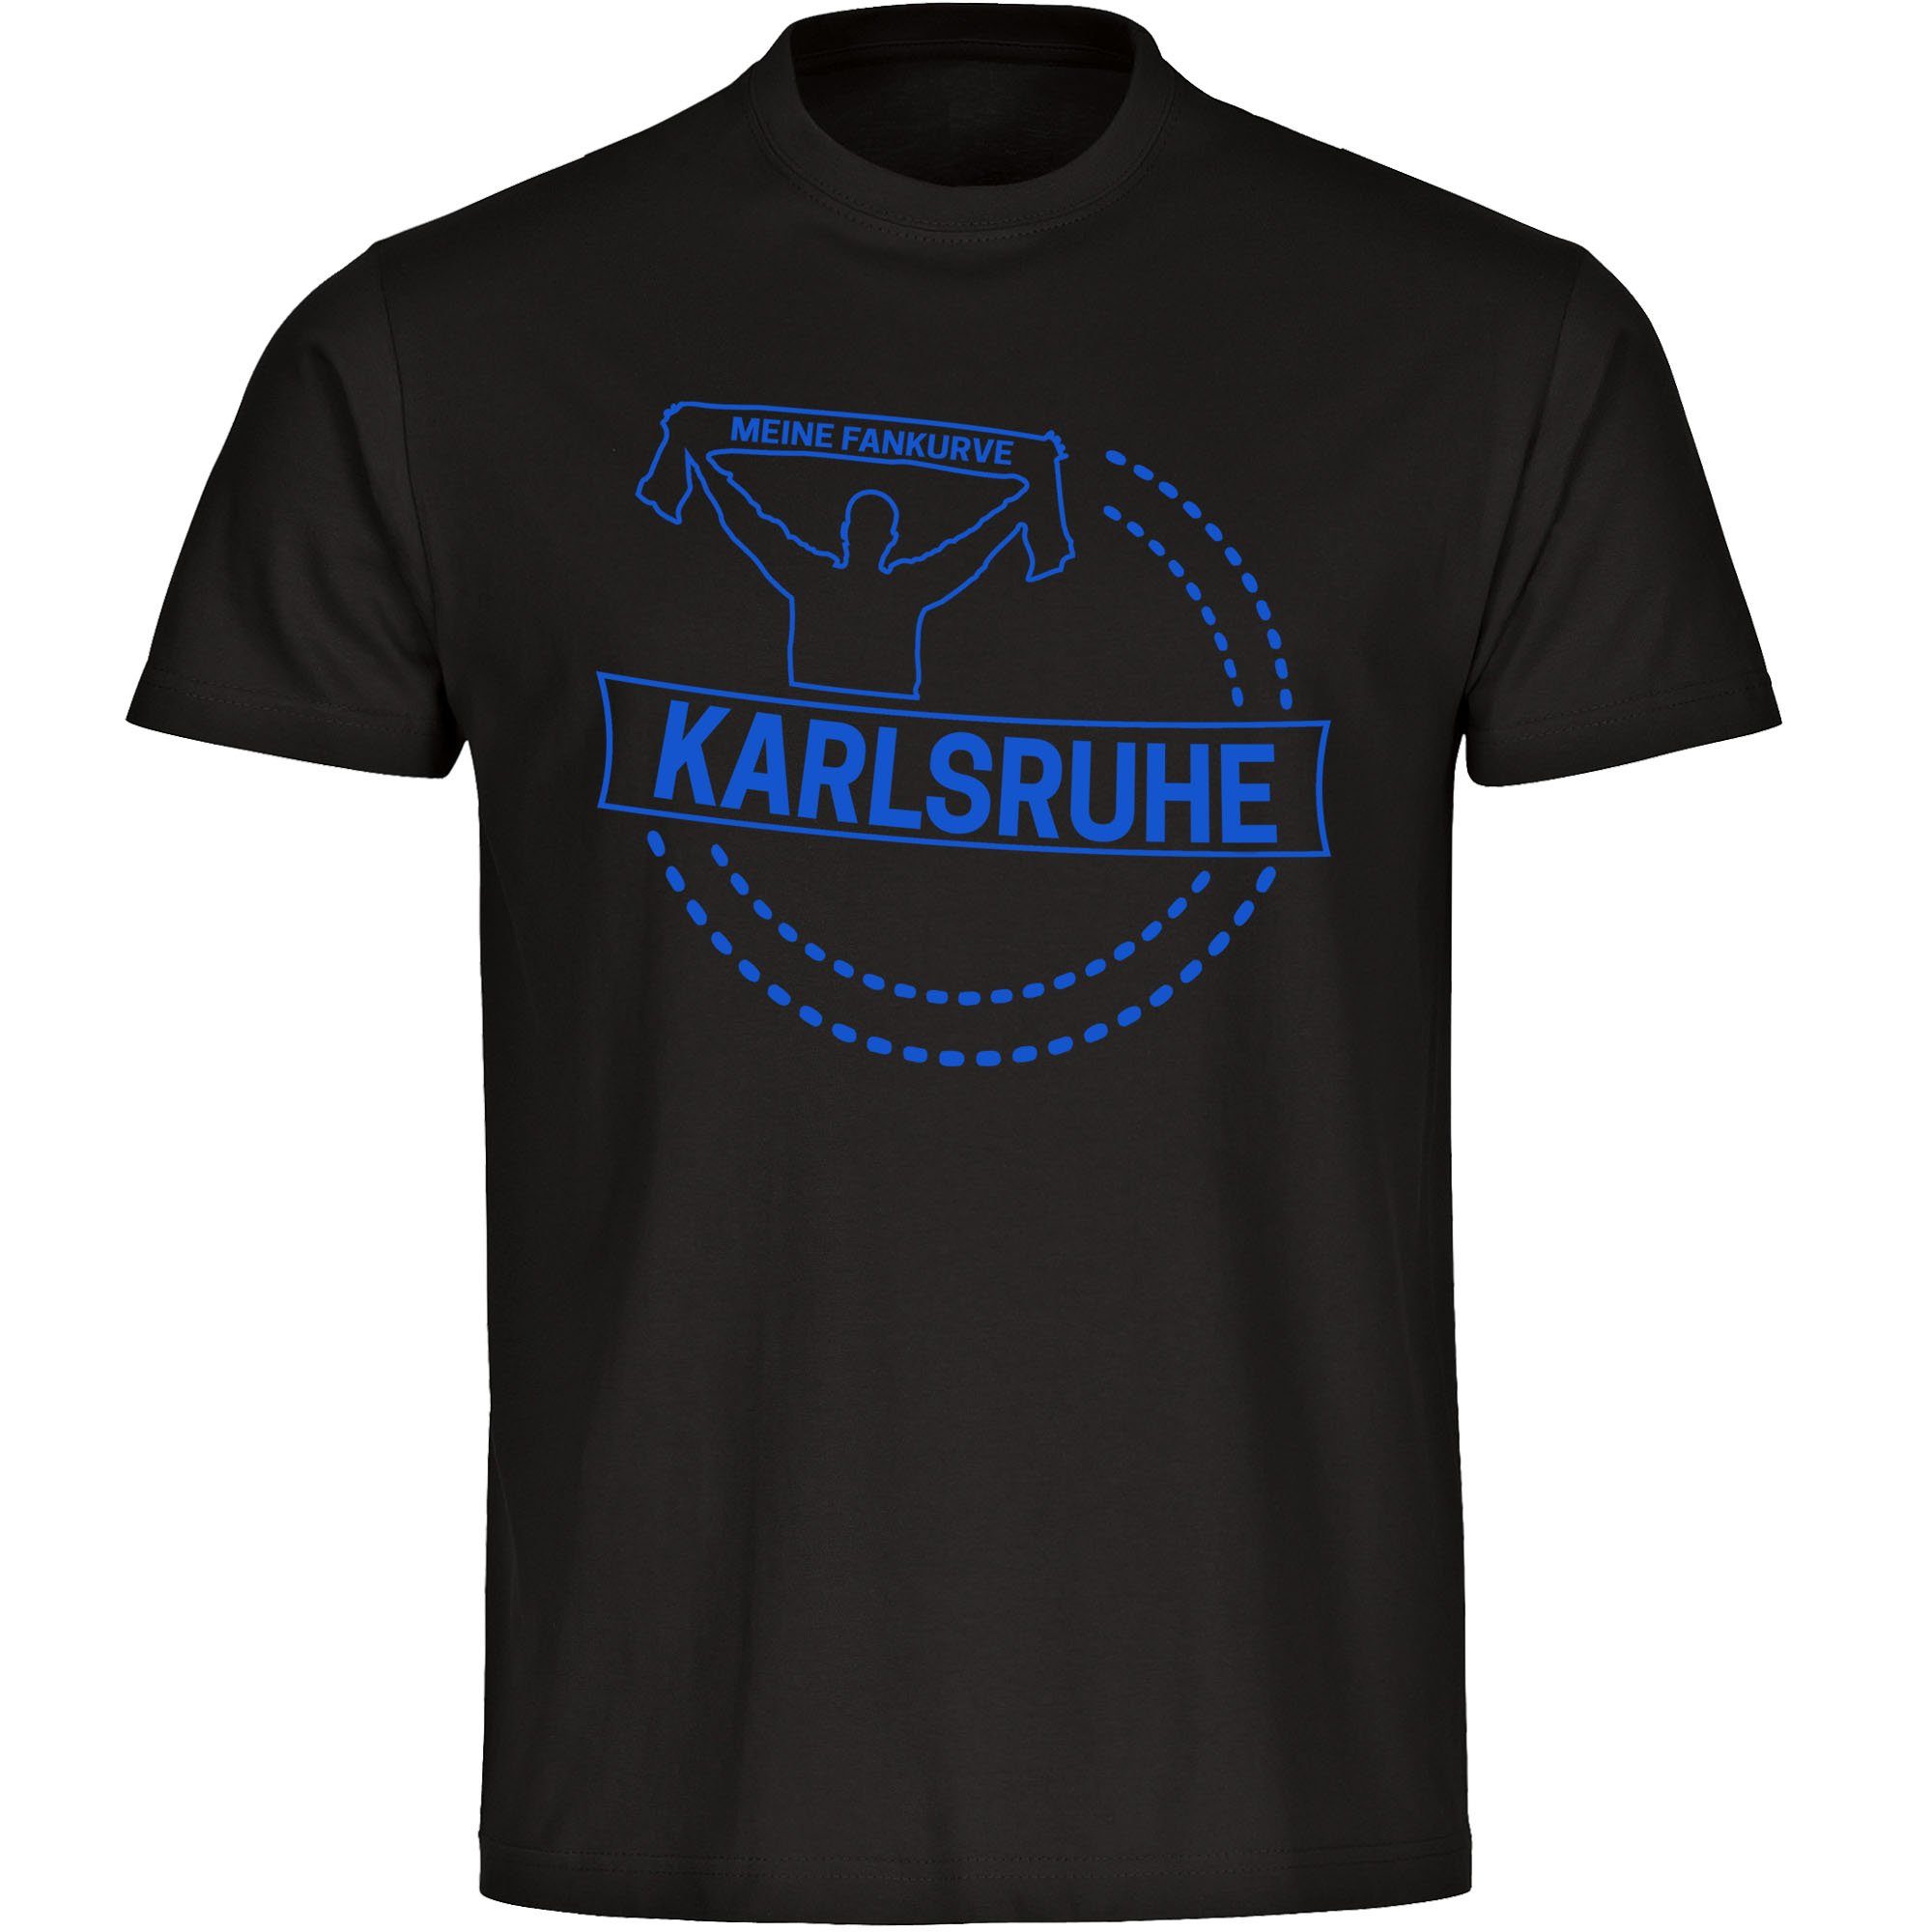 multifanshop T-Shirt Herren Karlsruhe - Meine Fankurve - Männer